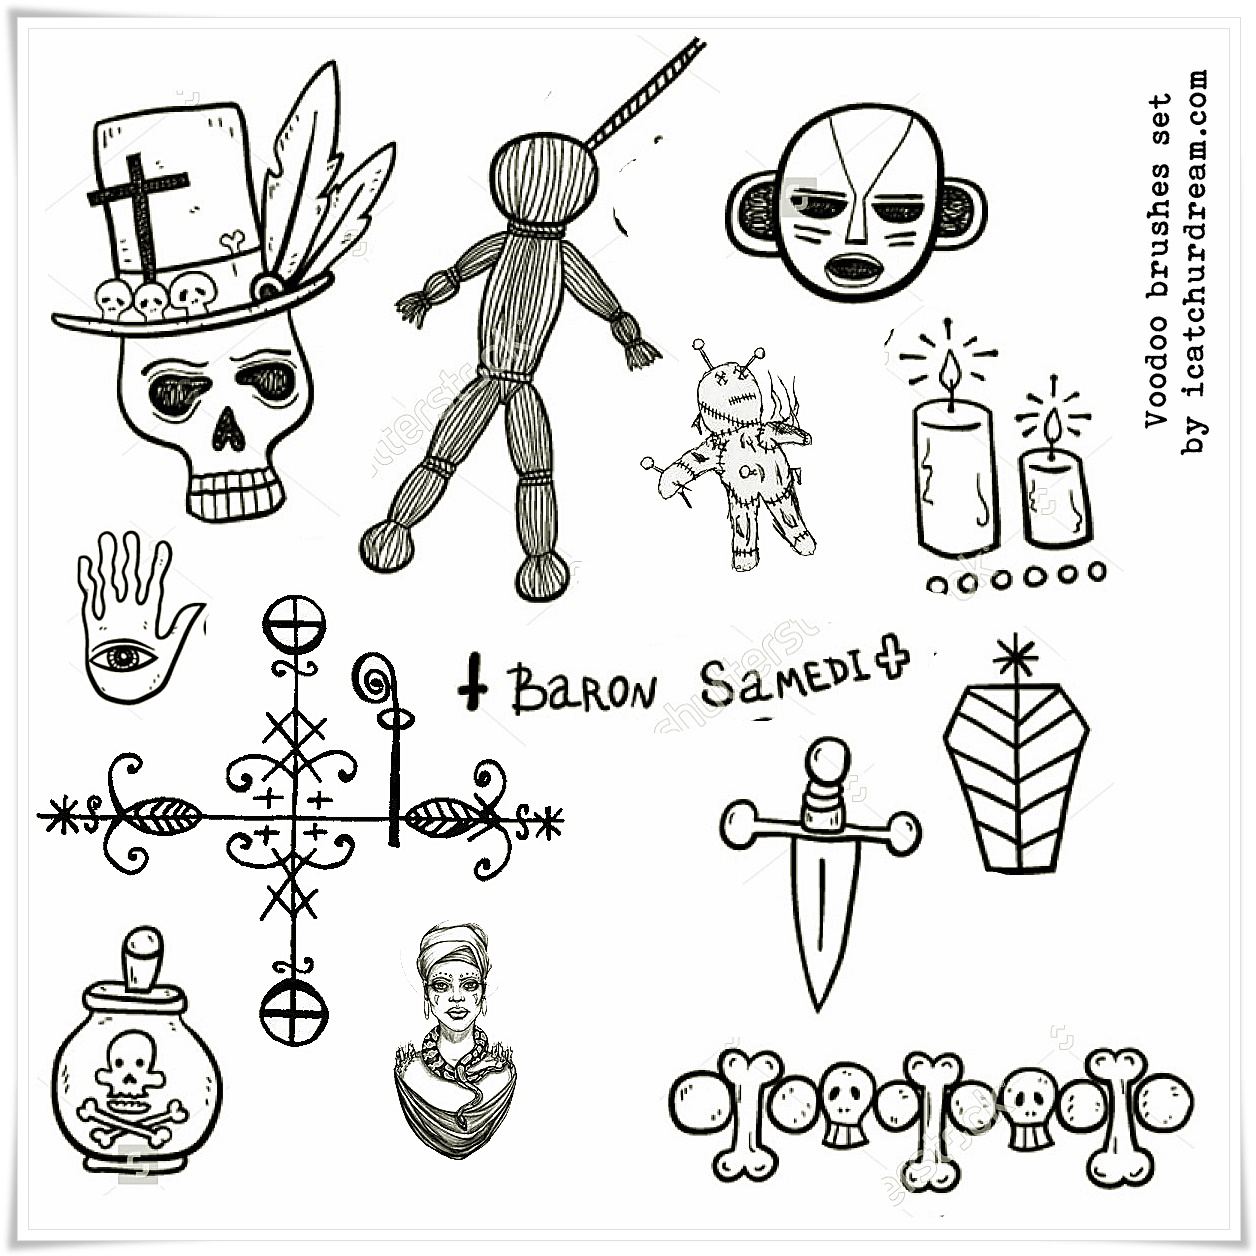 Voodoo symbols PS brushes by iCatchUrDream on DeviantArt